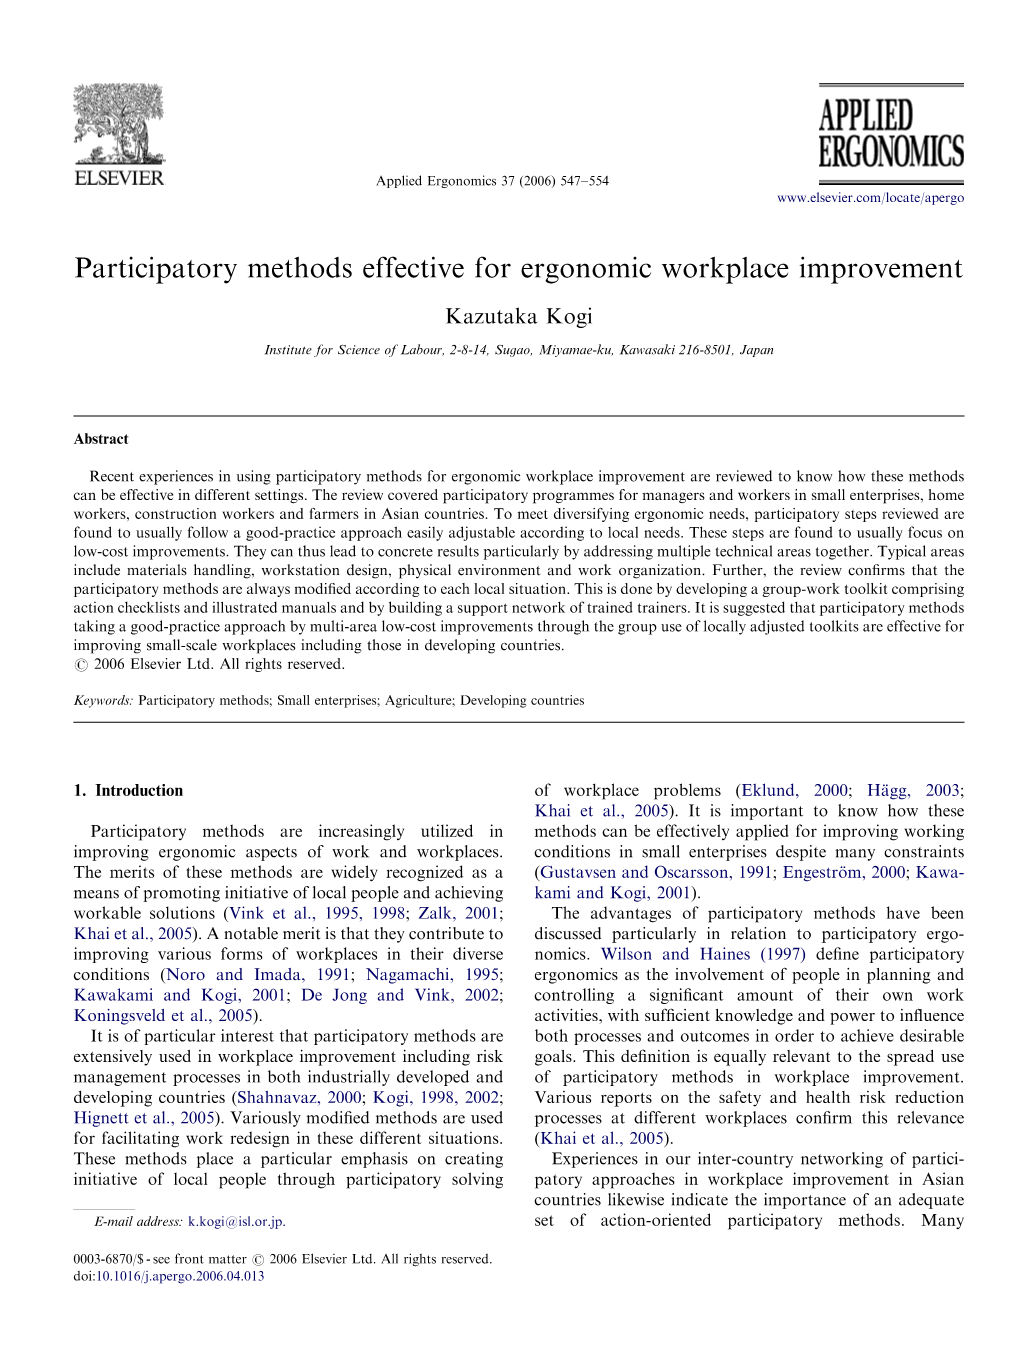 Participatory Methods Effective for Ergonomic Workplace Improvement